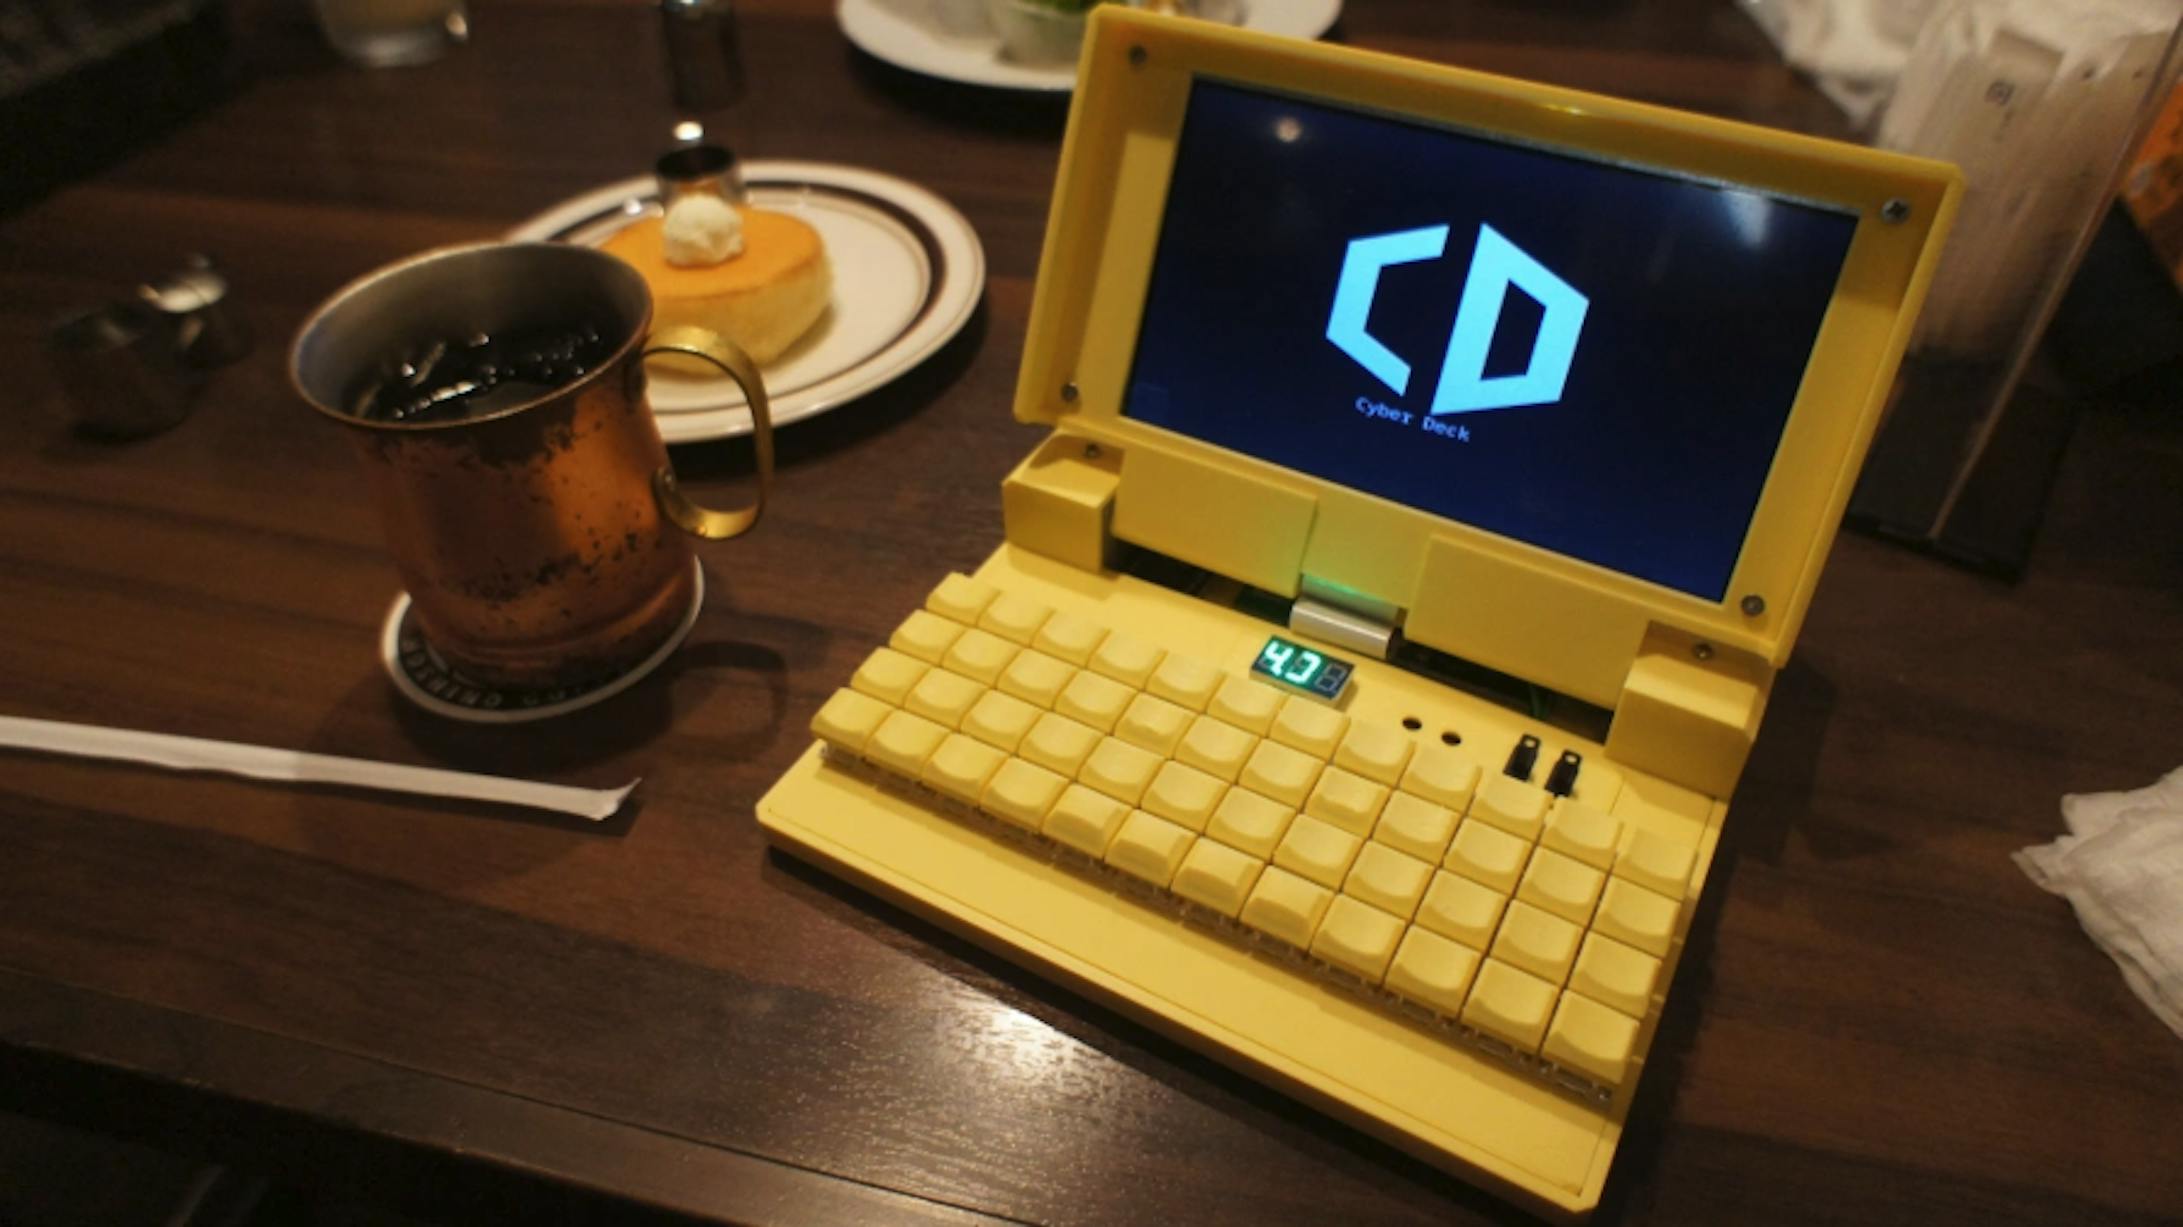 Shun Ikejima's Egg a 3D-Printed Ultra-Compact Ortholinear Raspberry Pi Zero W Laptop - Hackster.io